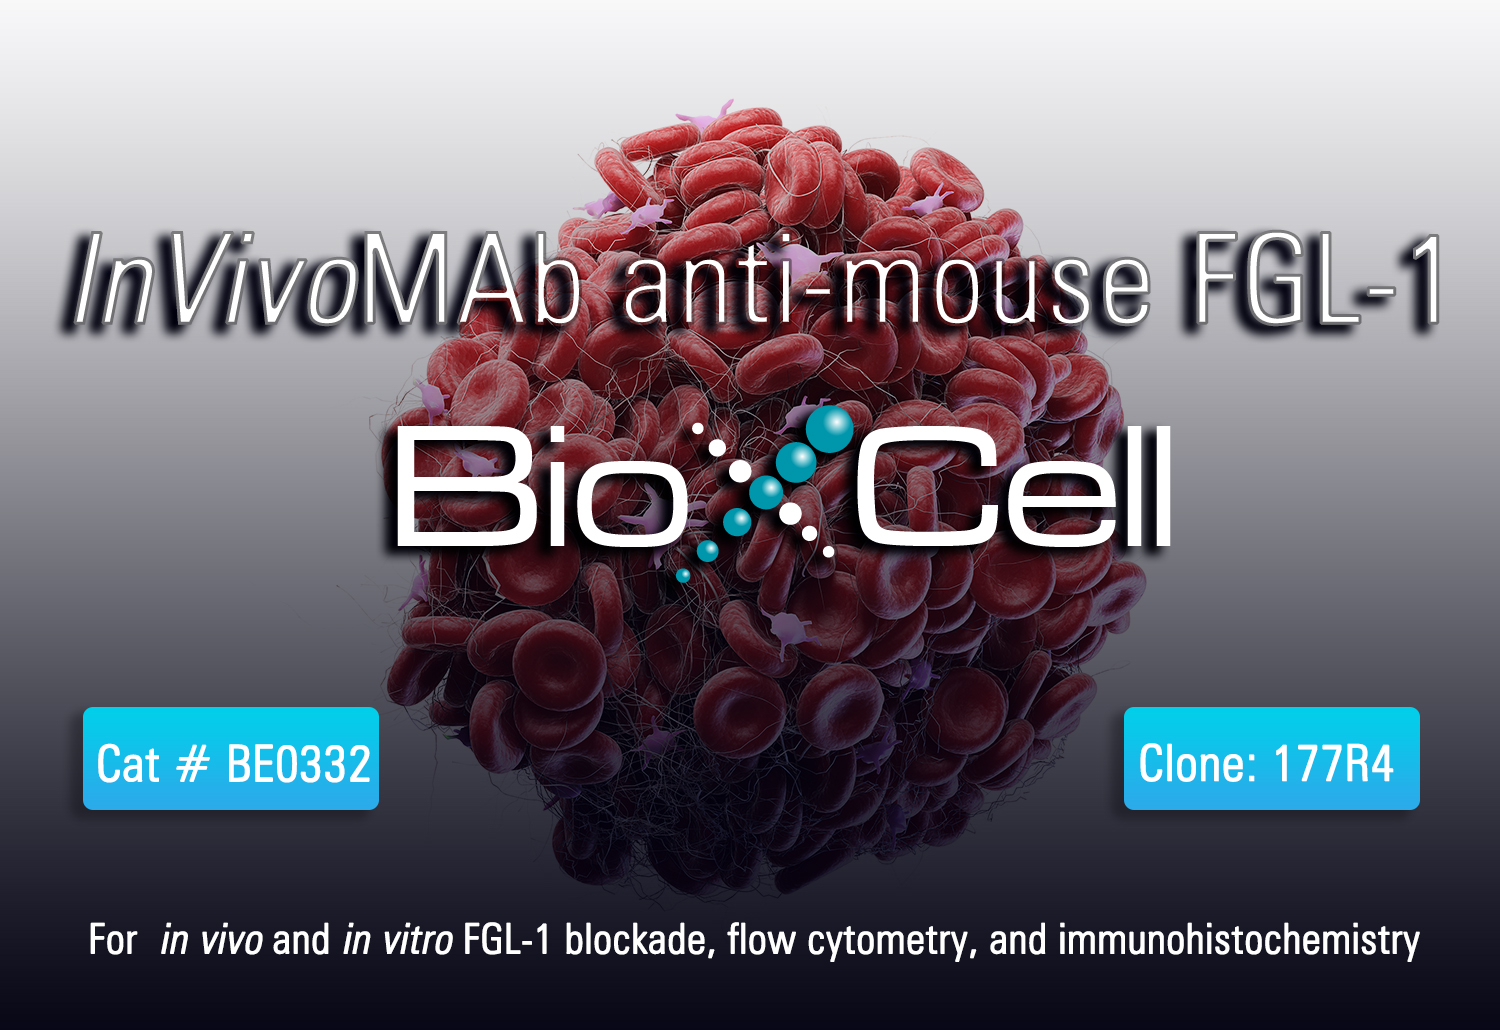 InVivoMAb anti-mouse FGL-1